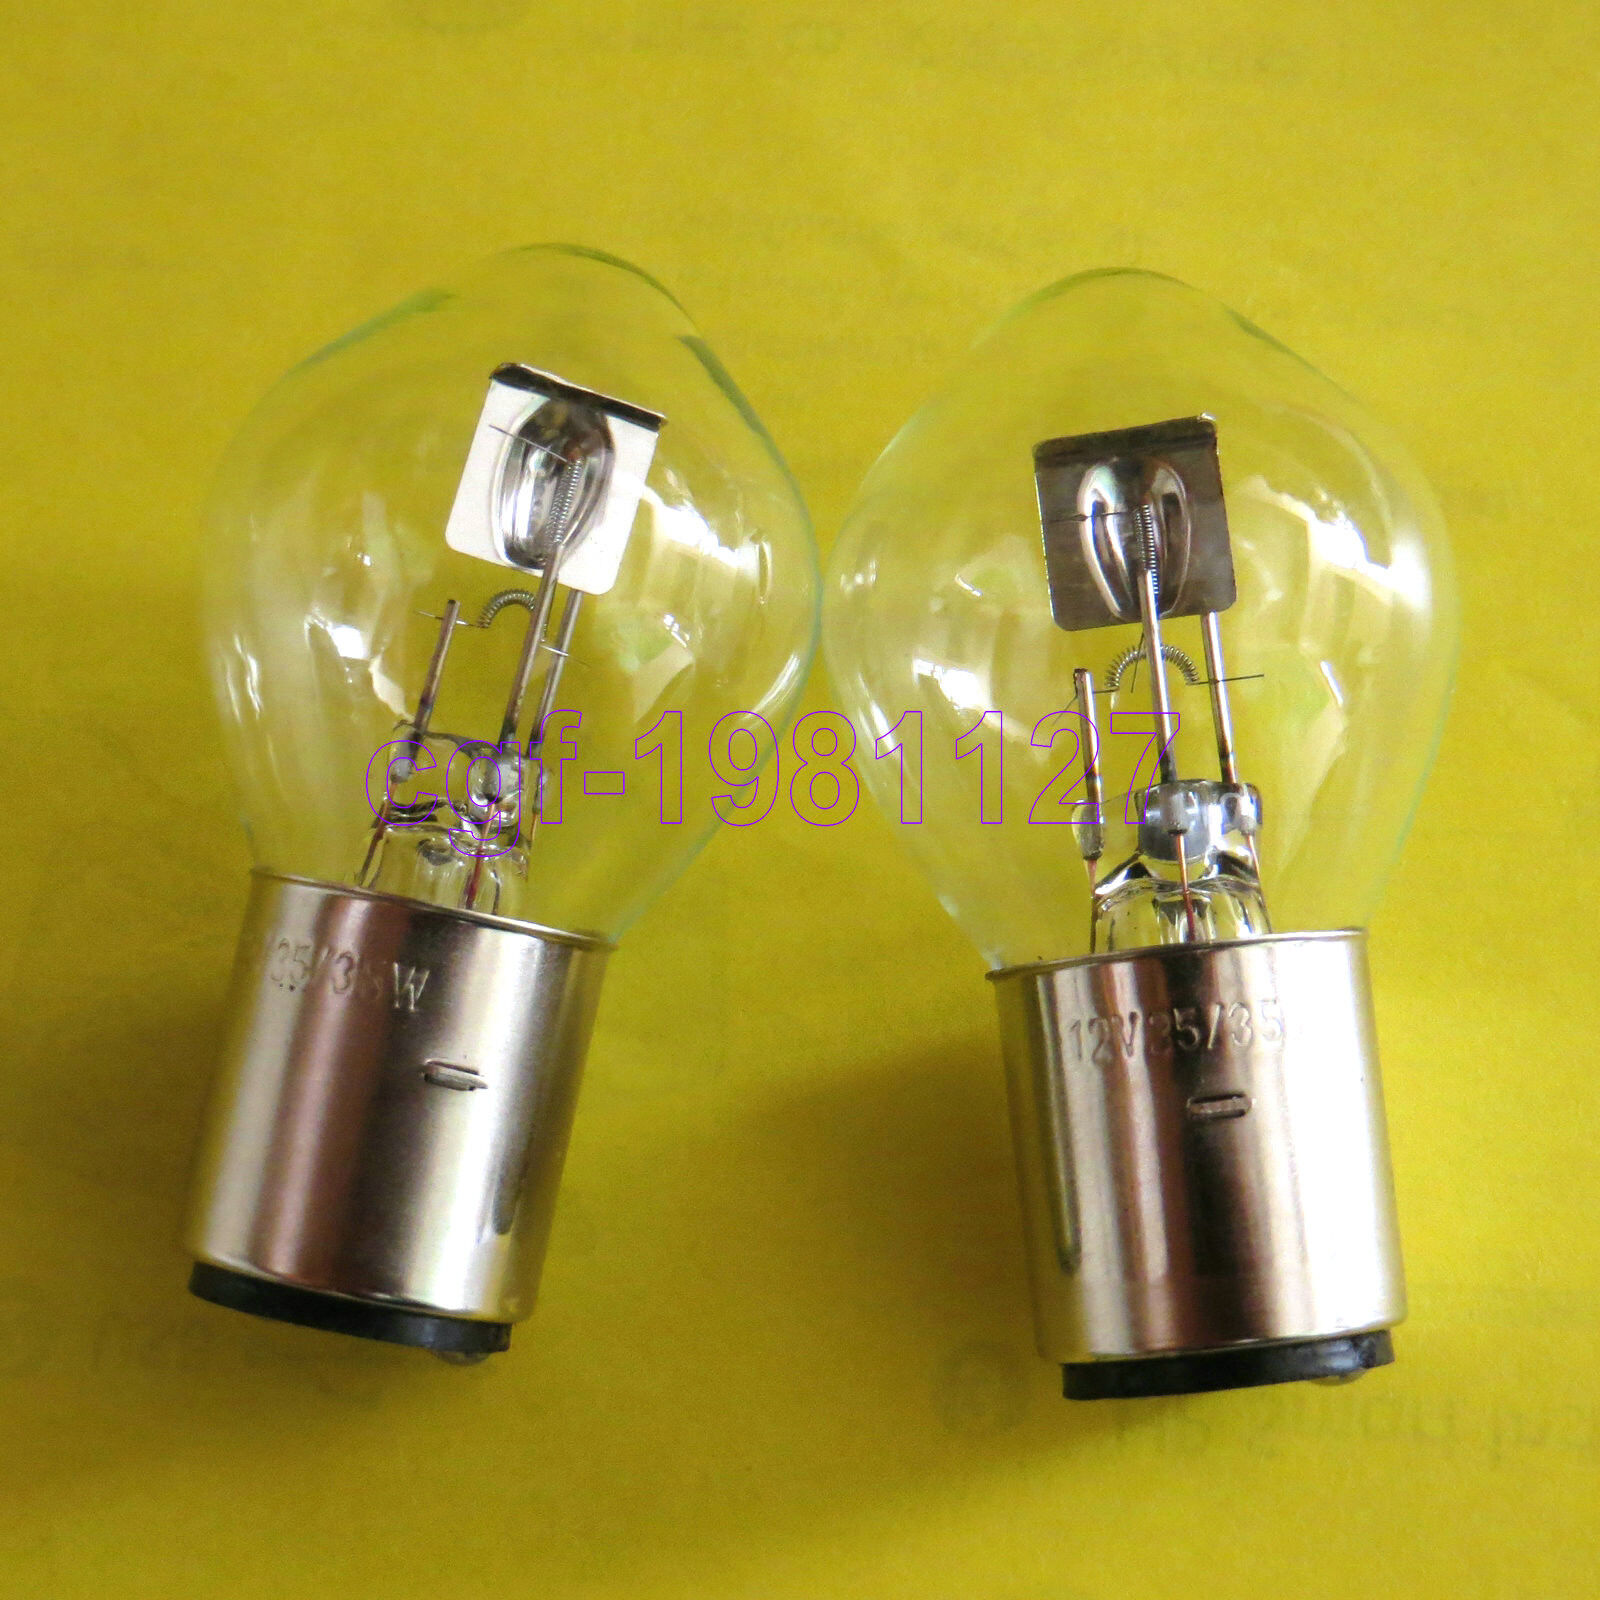 2 x Motorcycle Headlight Lamp Light Bulb / 12728 12V 35/35W S2 BA20D Universal